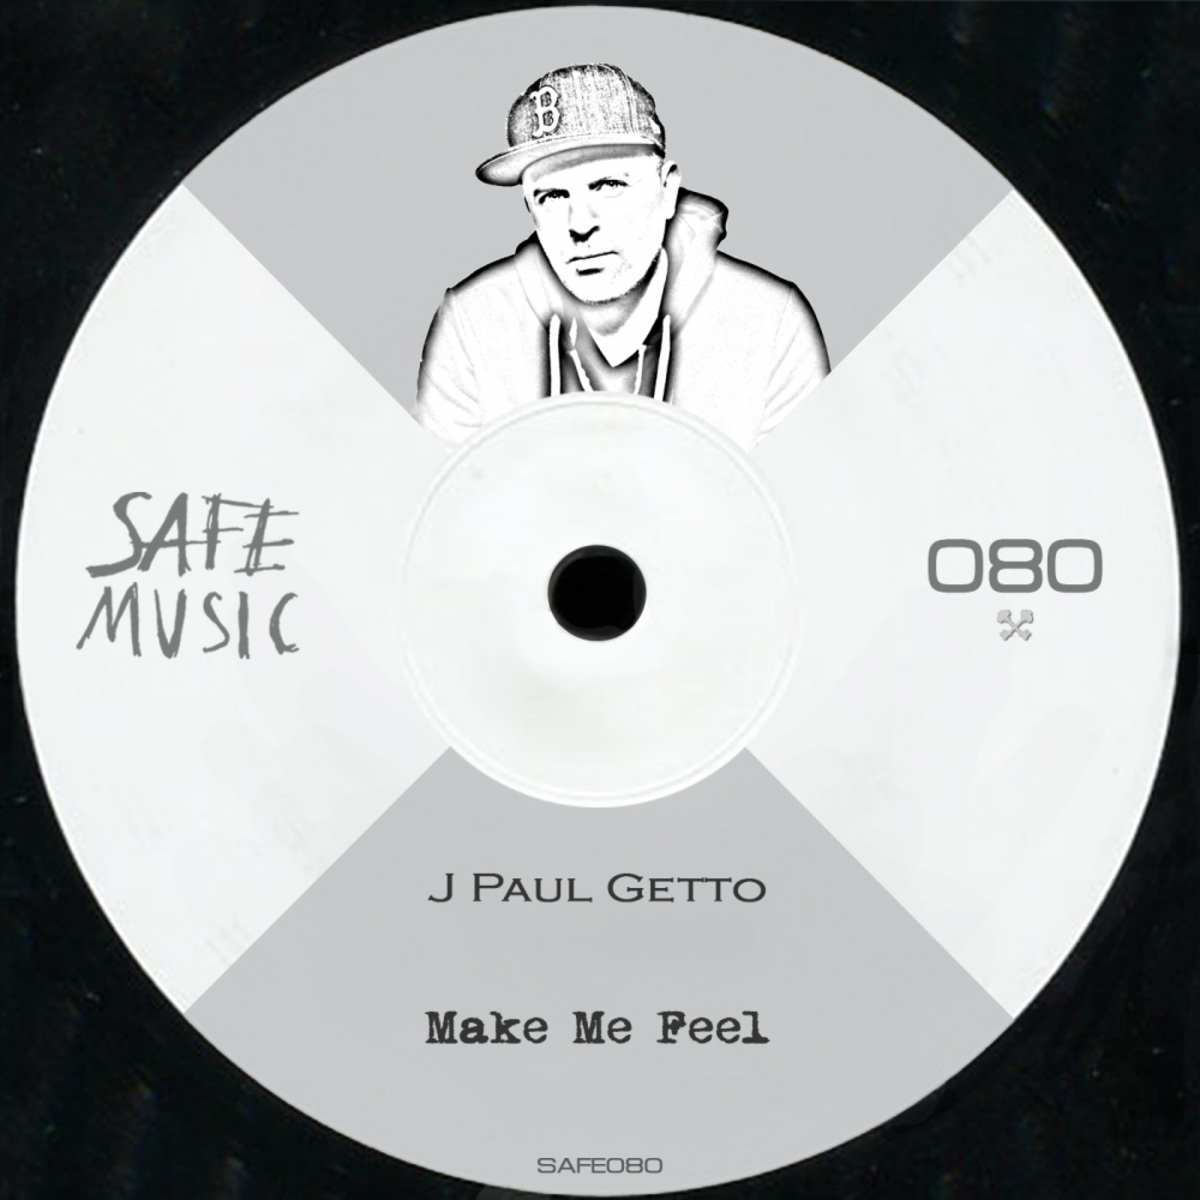 J Paul Getto - Make Me Feel / SAFE MUSIC